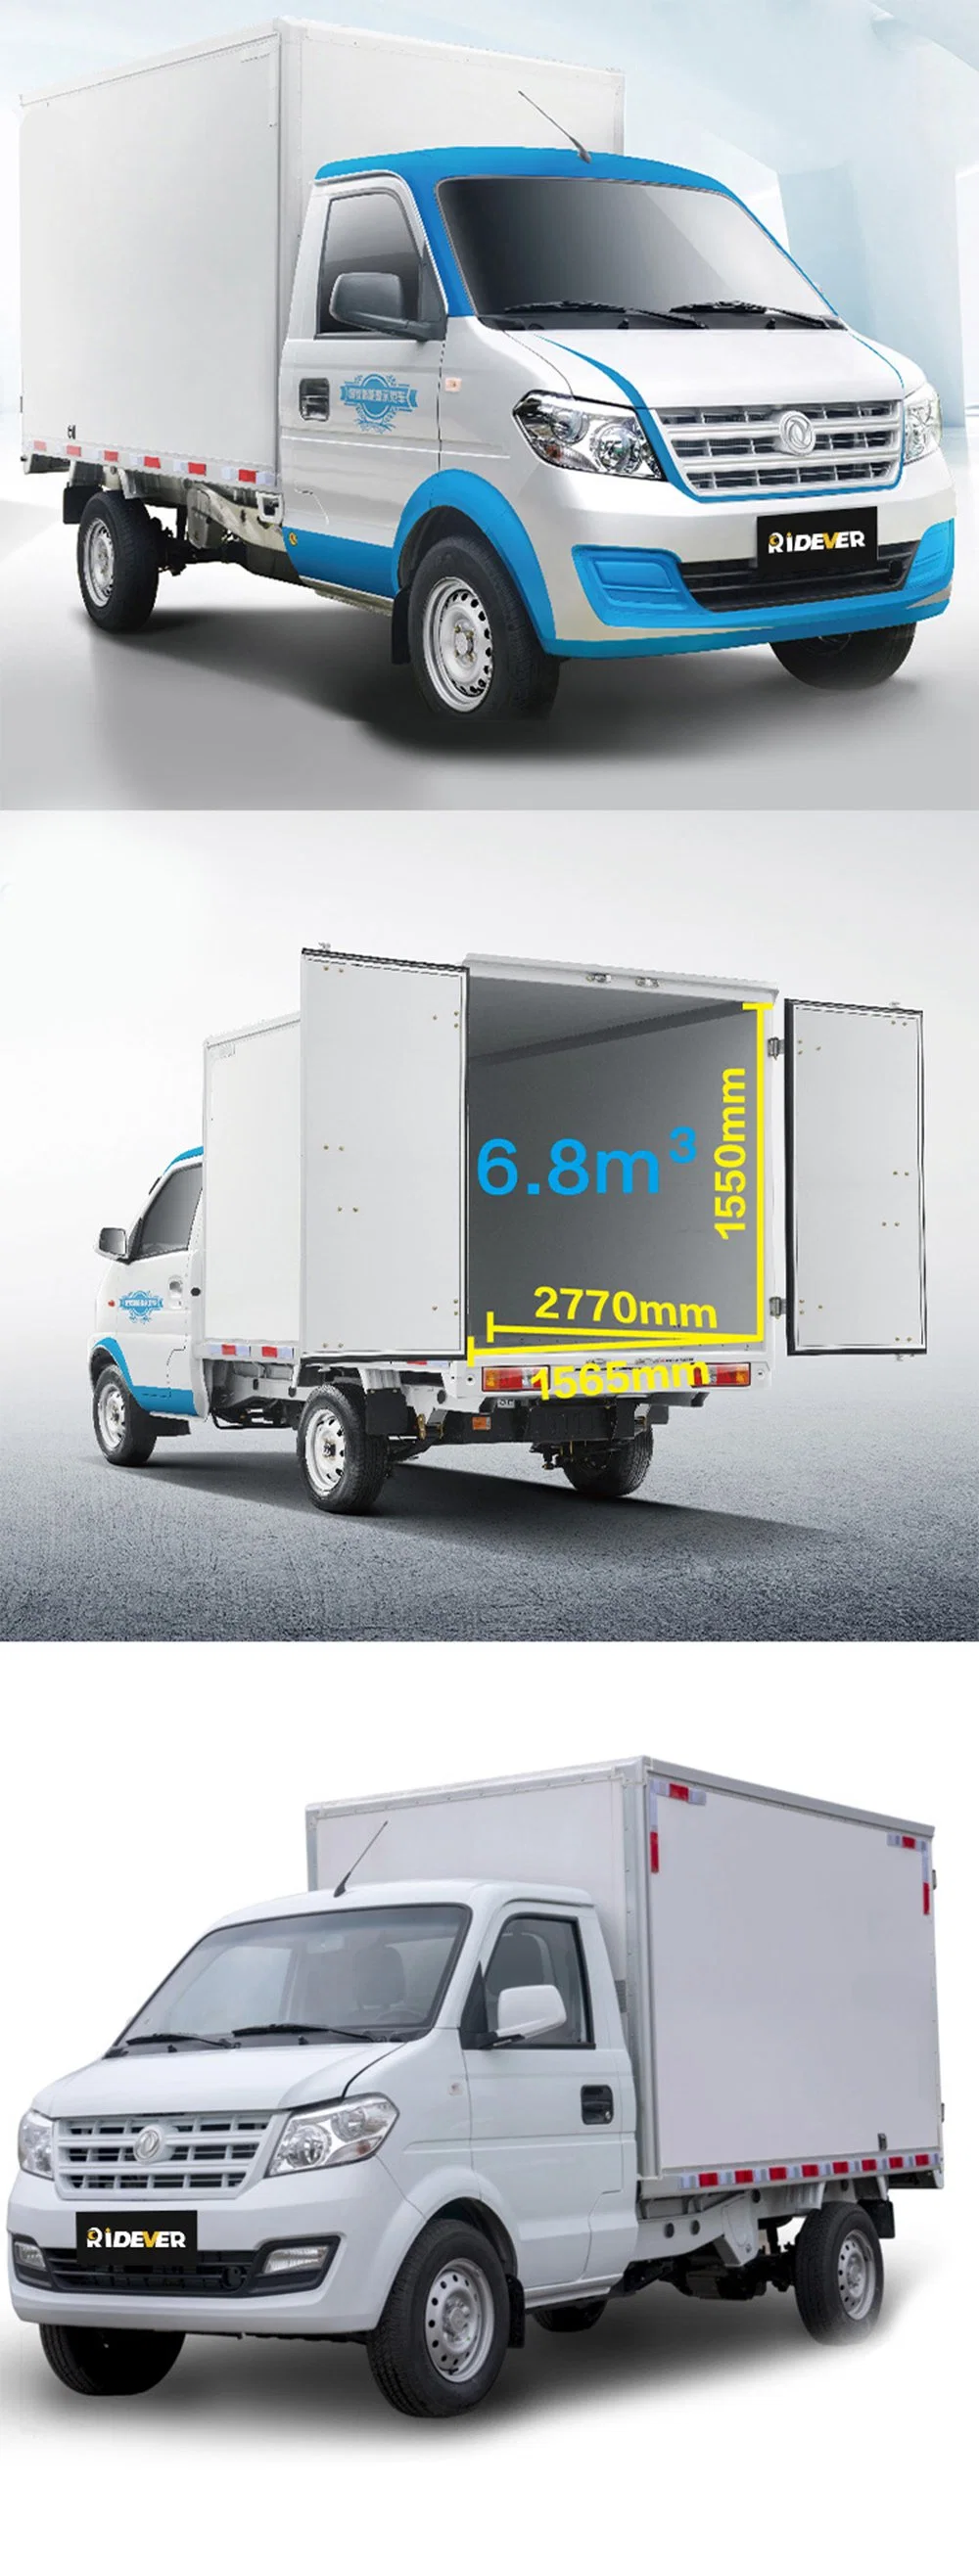 Ridever New Energy Drive Ruichi Ec31 Mini Pick up Loading Cargo Custom Version 31.25kw Battery Capacity High Performance Mini Pickup Car